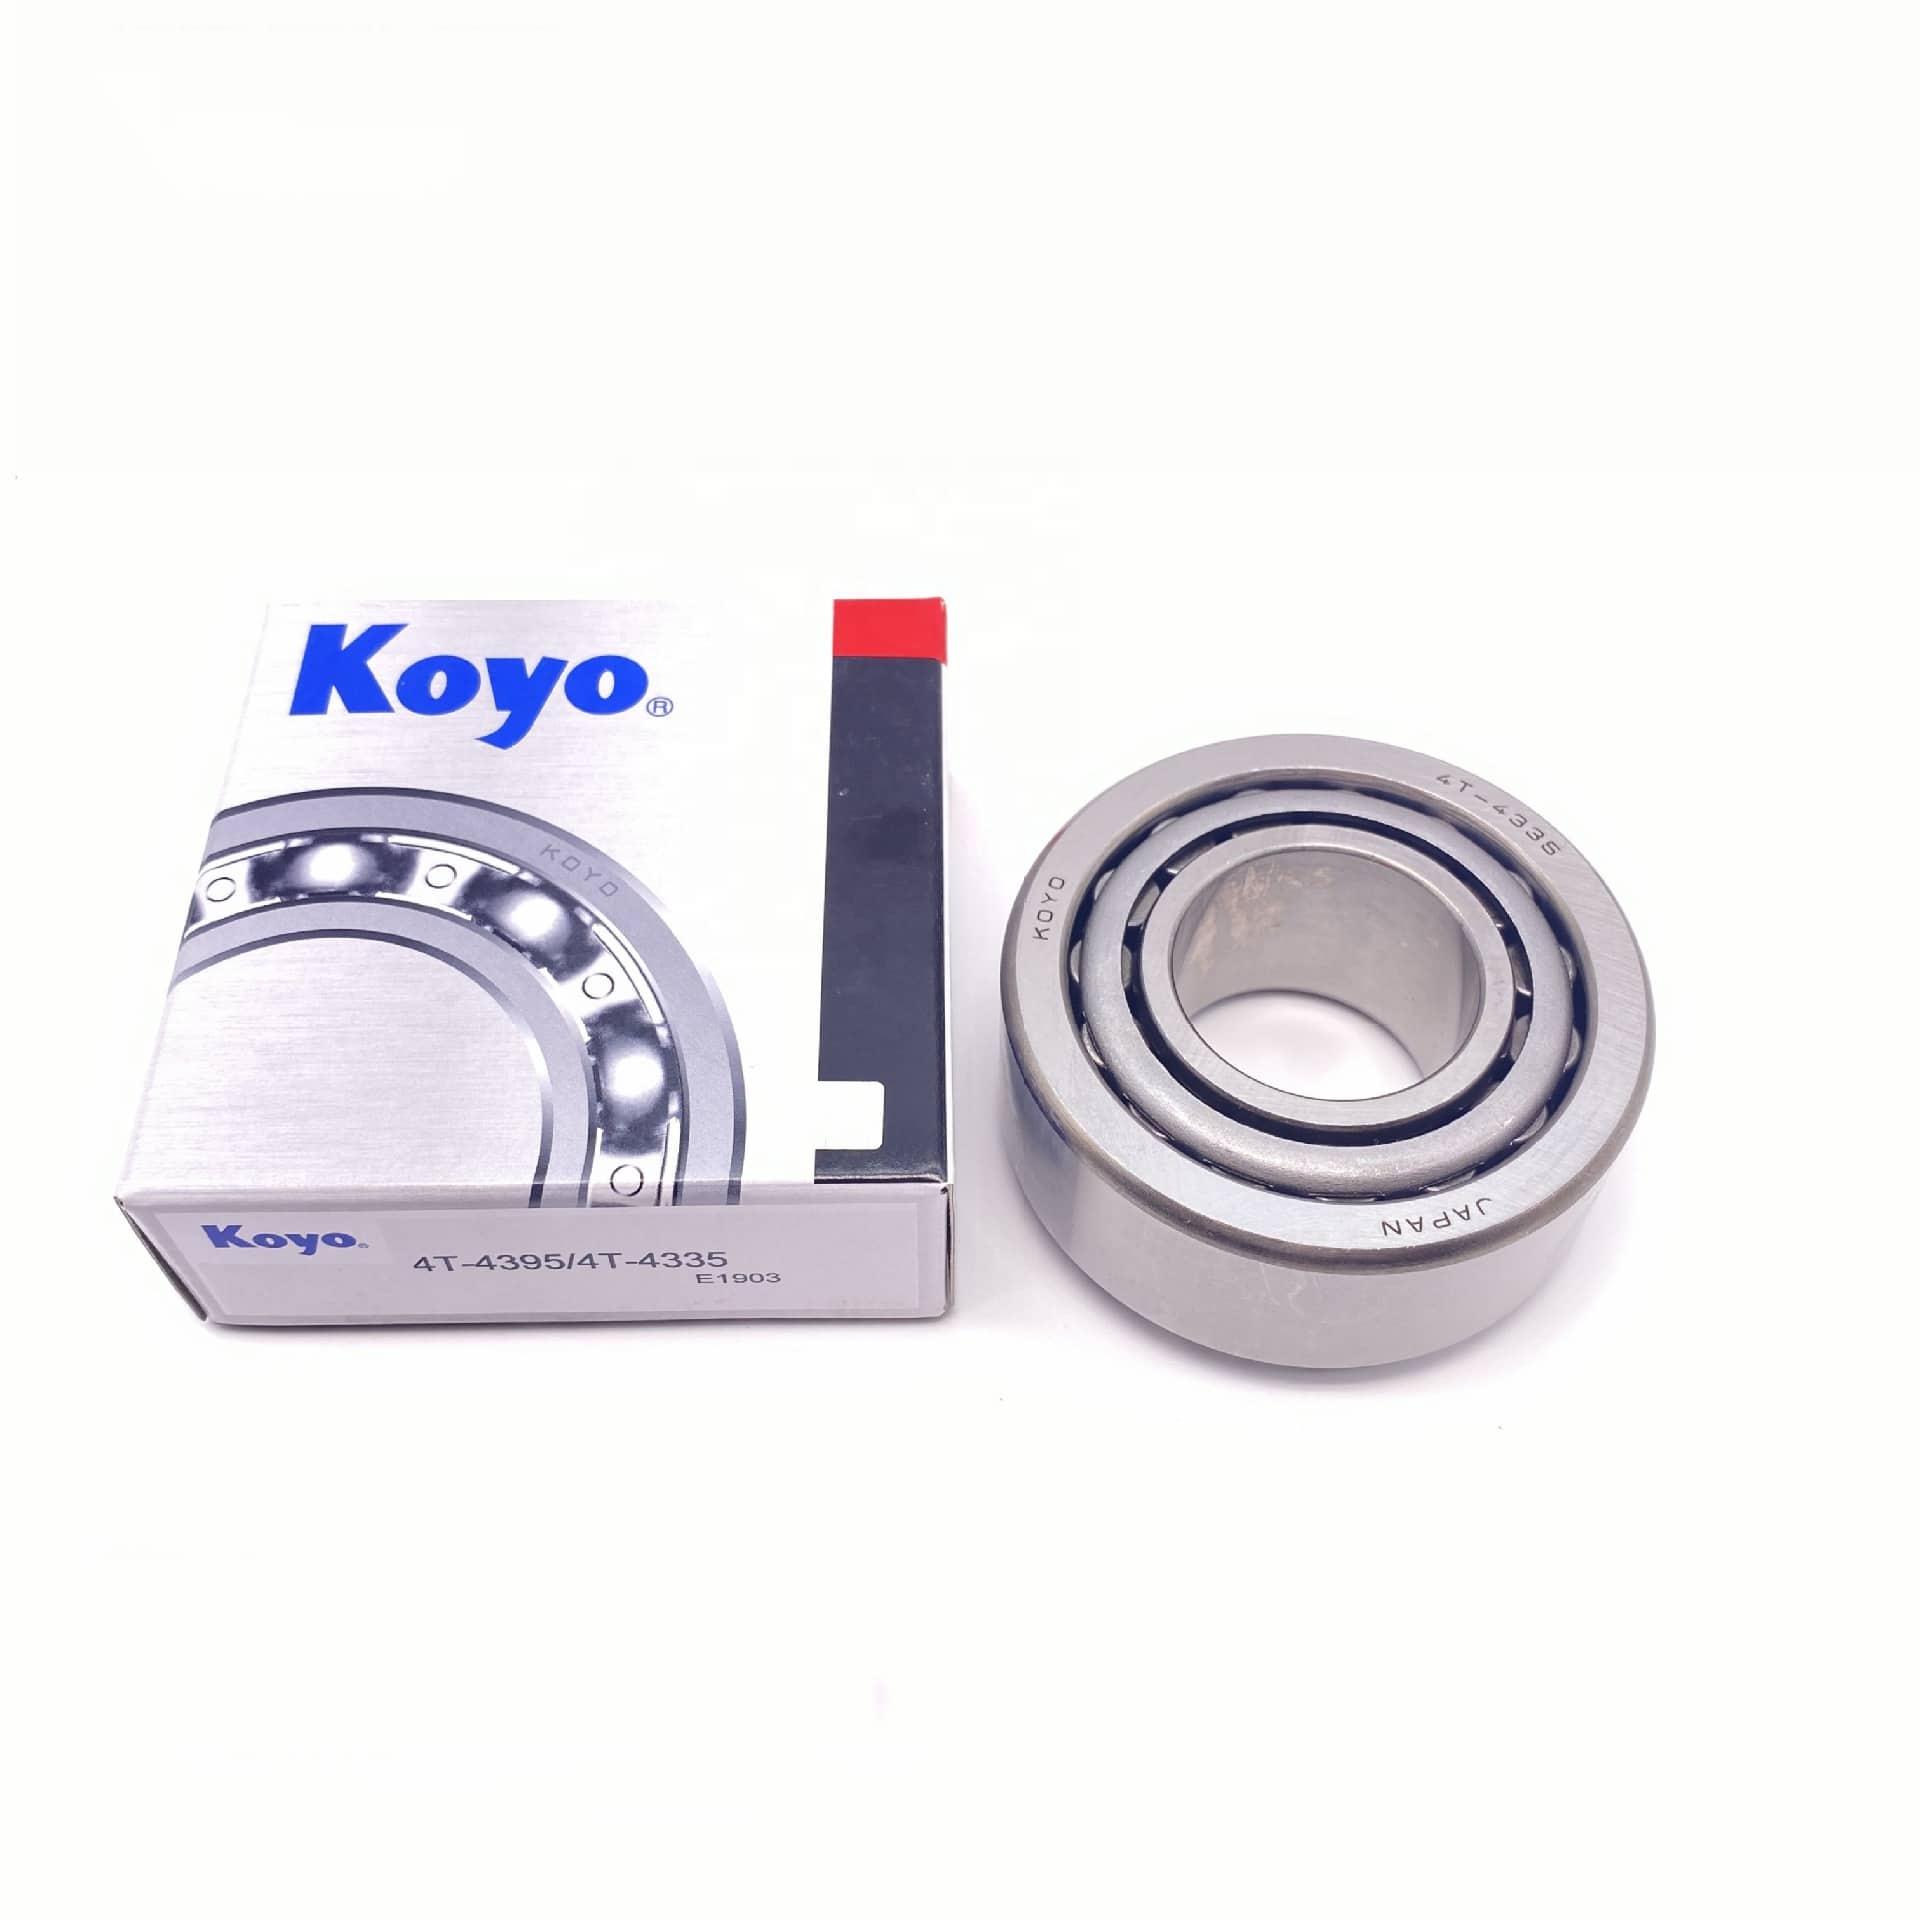 Koyo 4395/4335 Taper roller beearing for Plastic Packaging Machinery